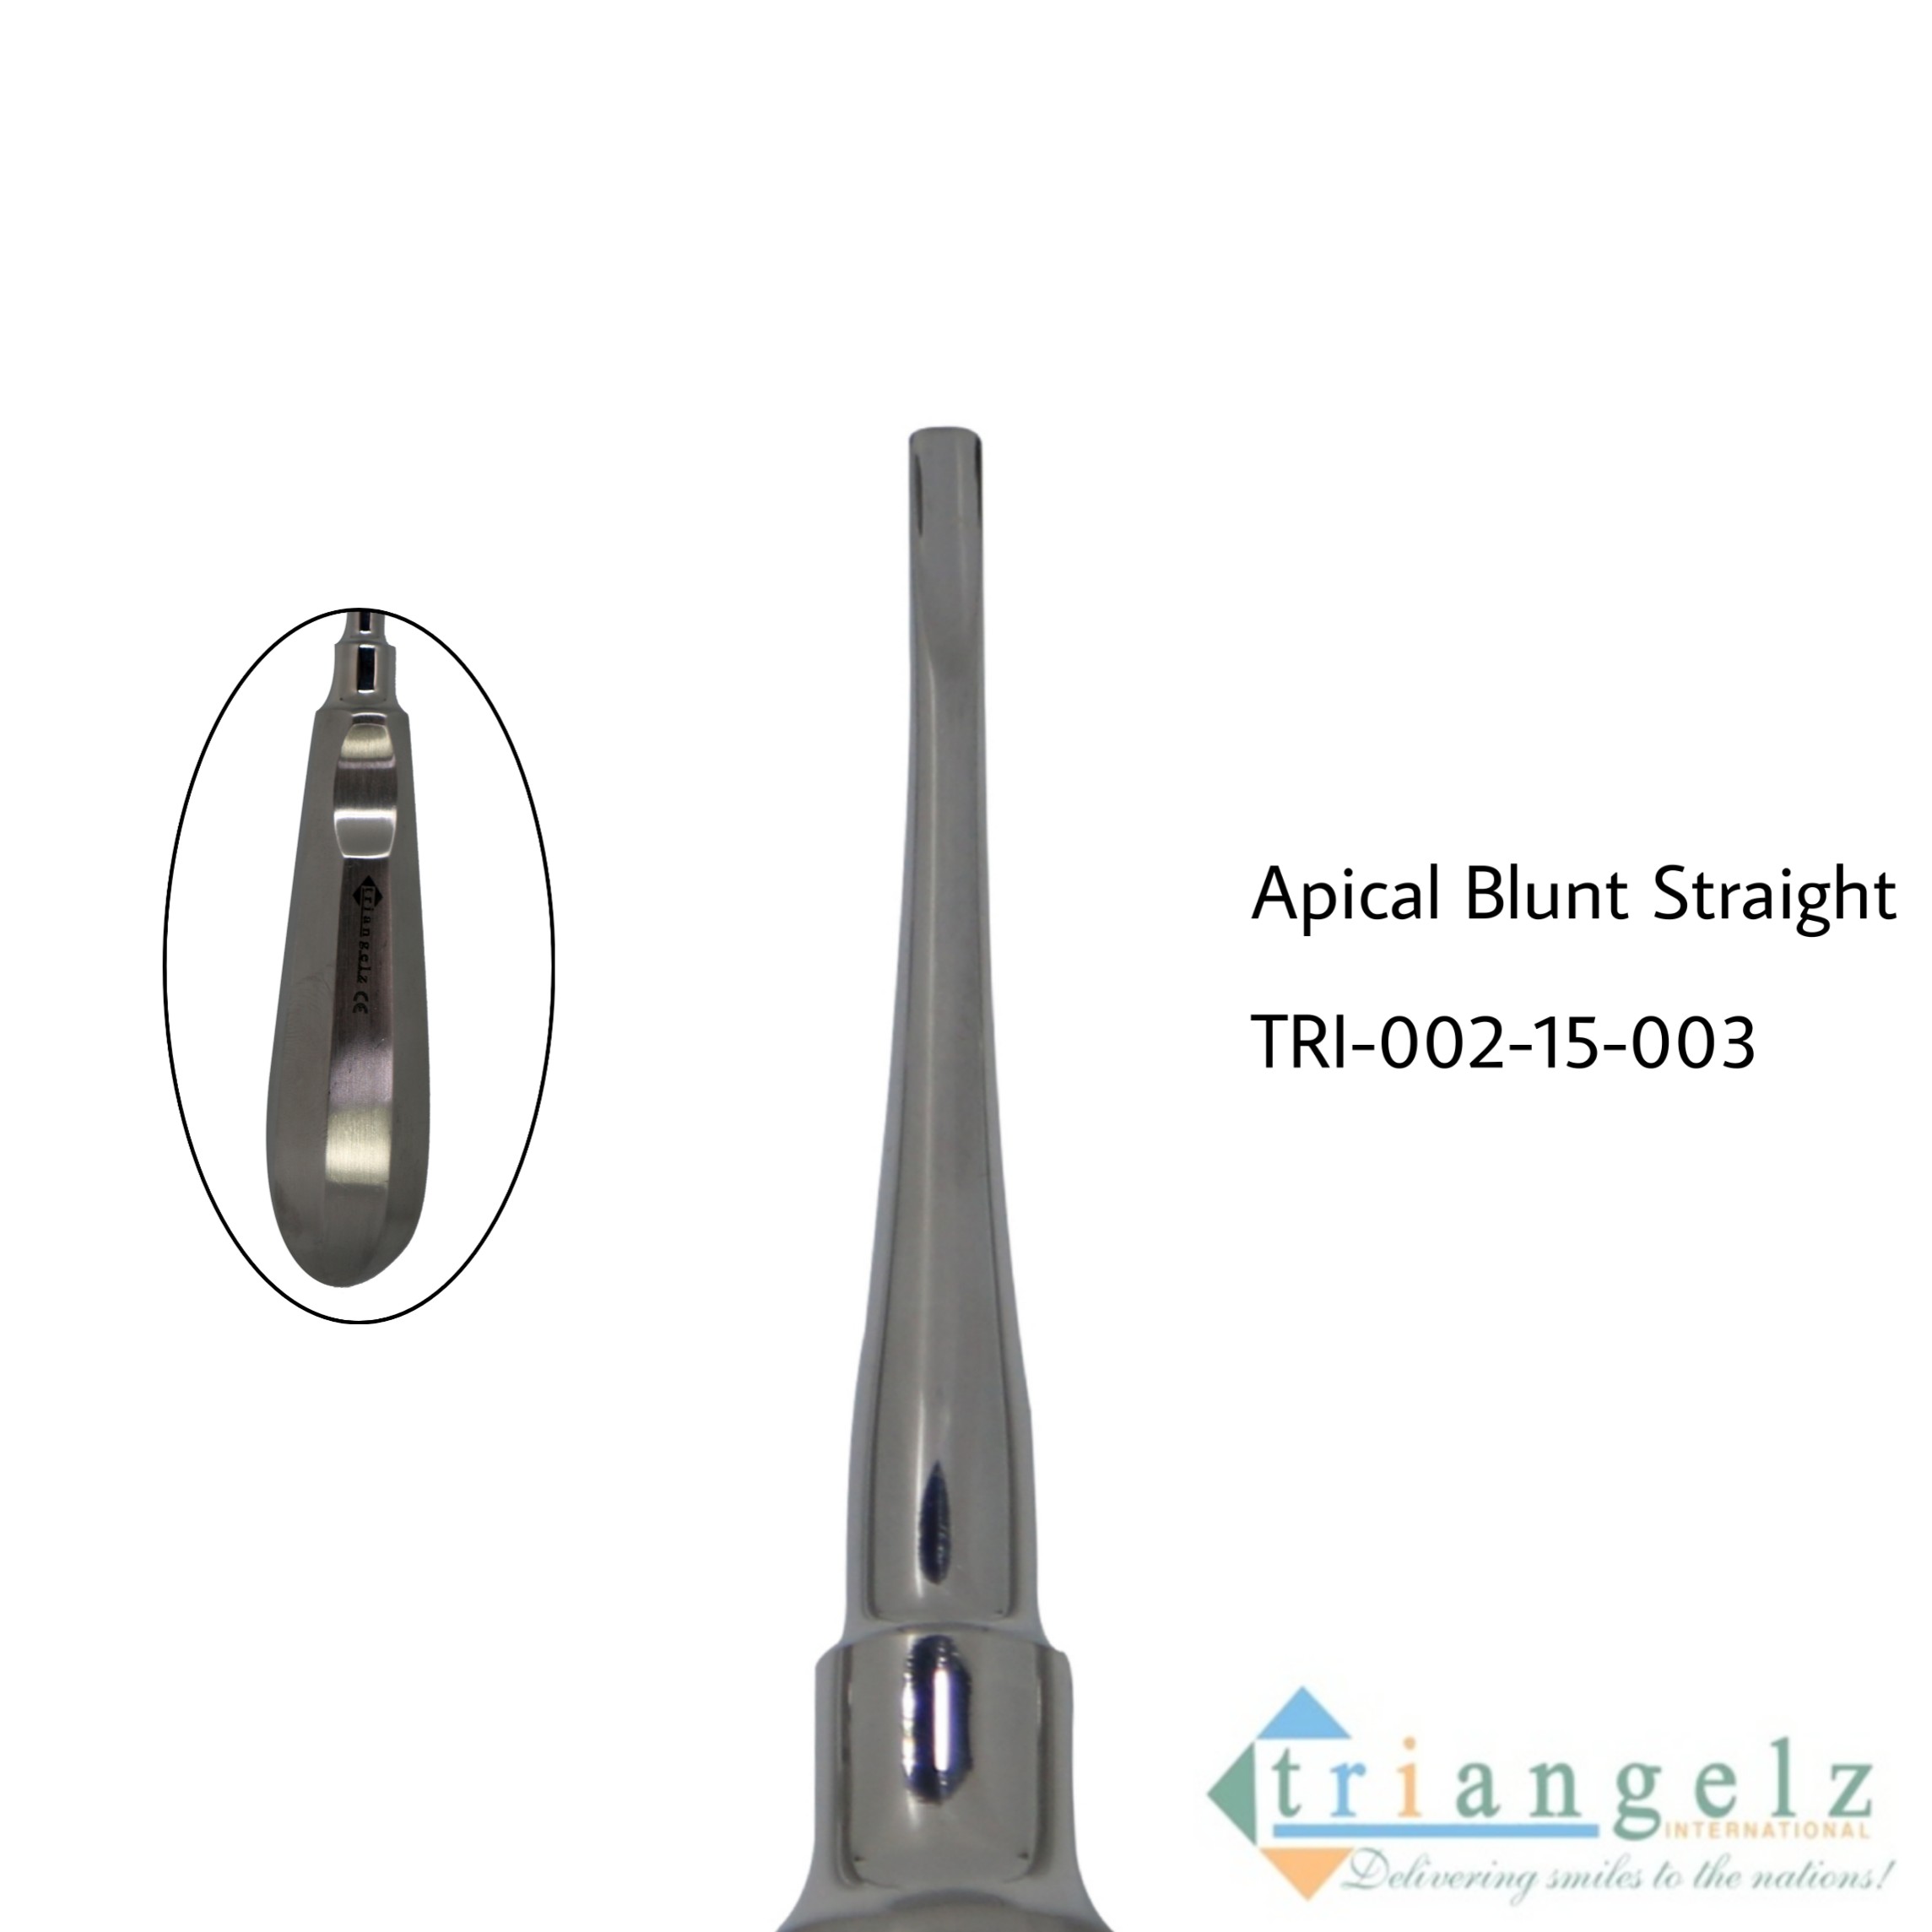 TRI-002-15-003 Apical Round Stright